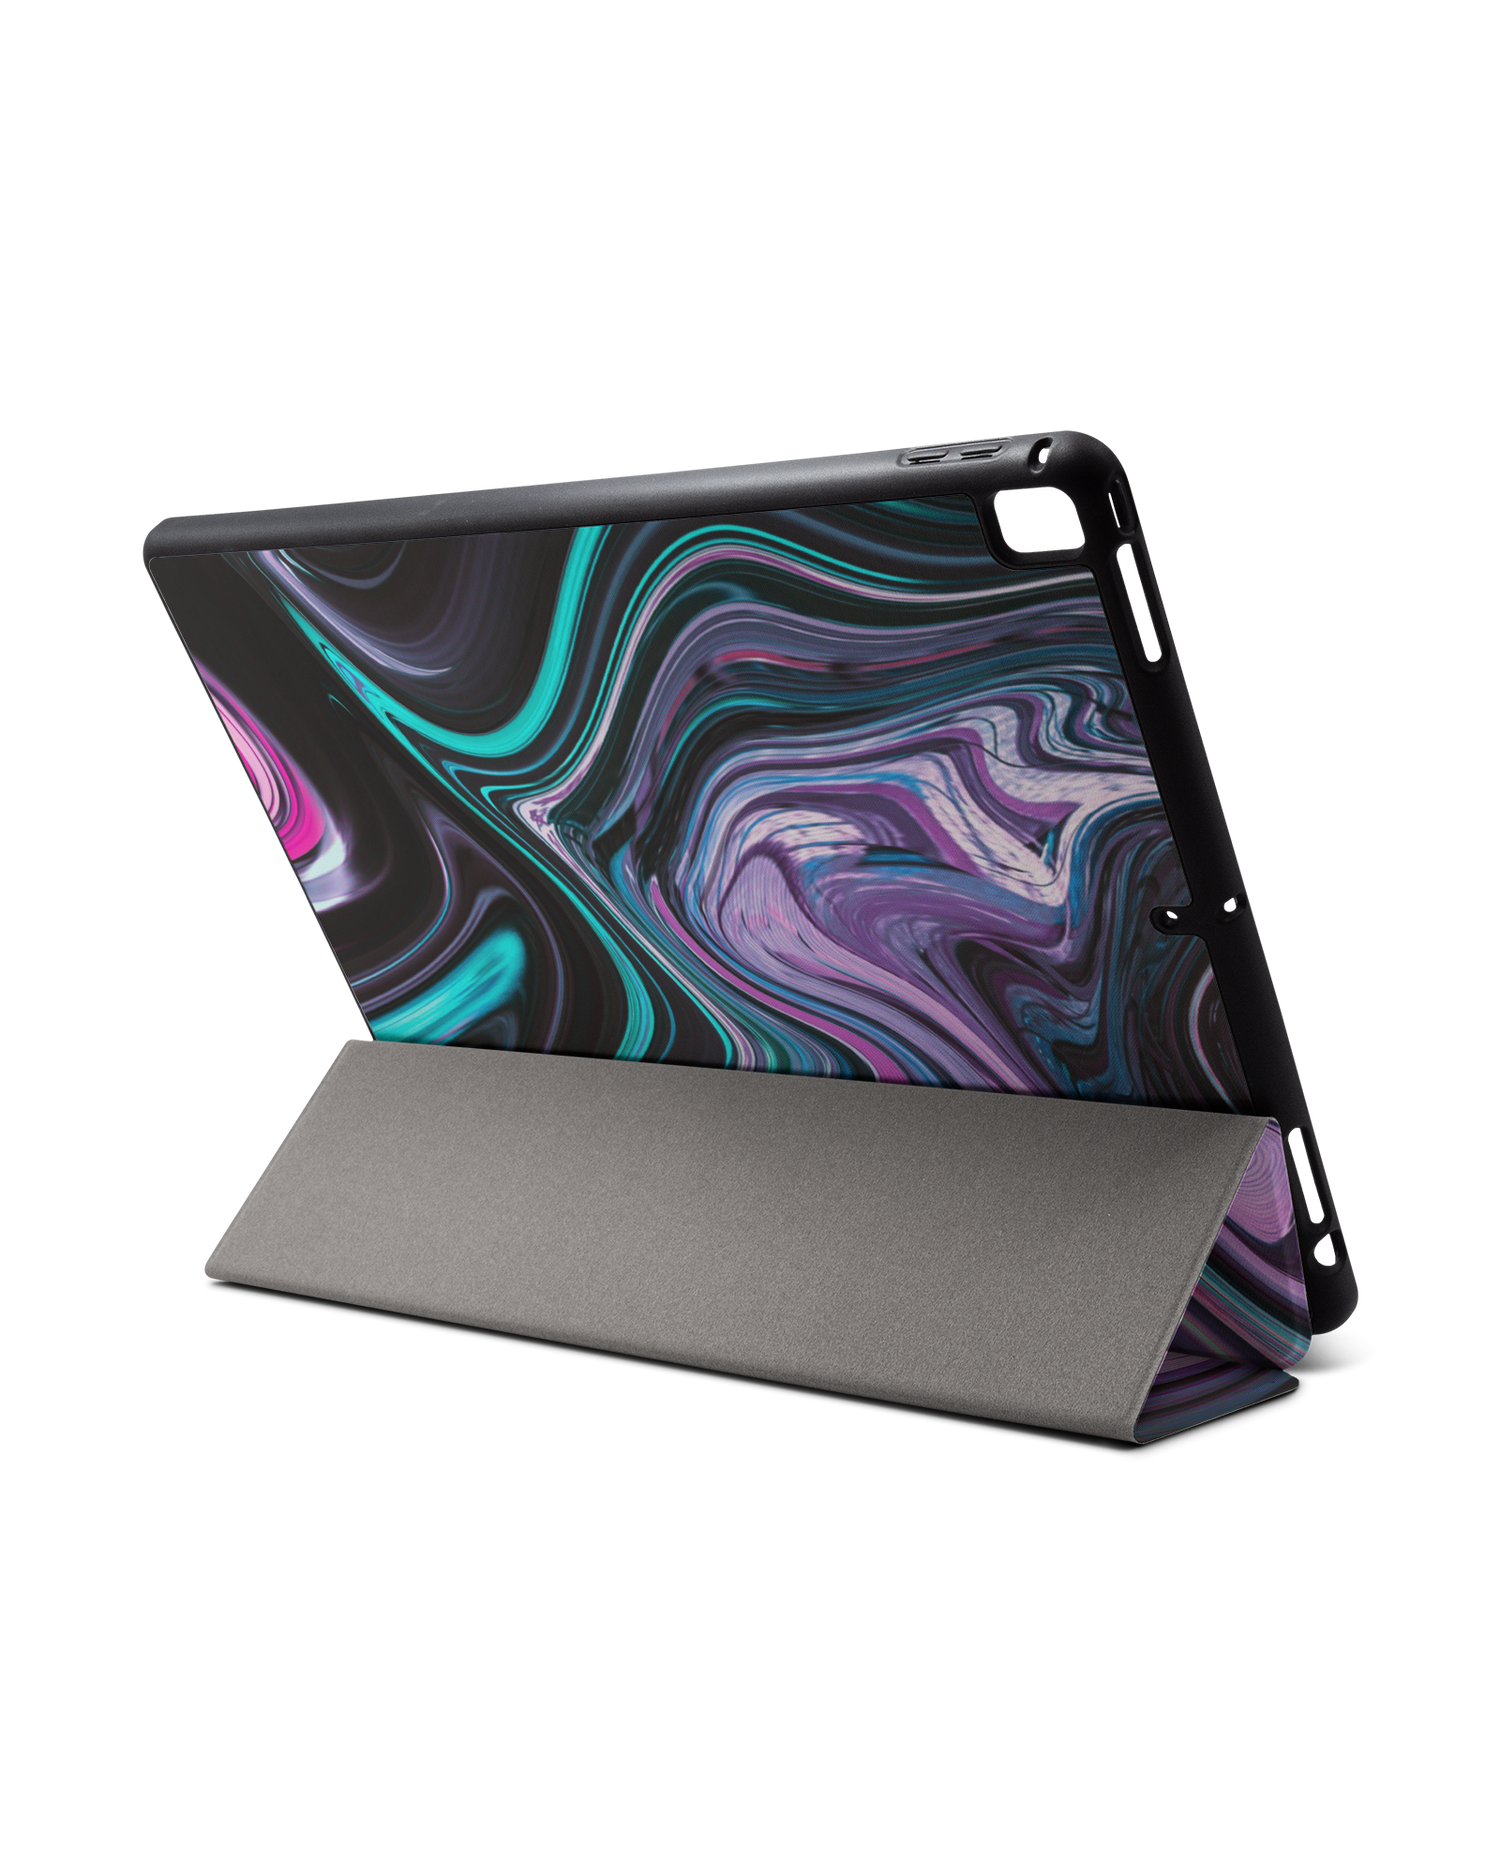 Digital Swirl iPad Case with Pencil Holder for Apple iPad Pro 2 12.9